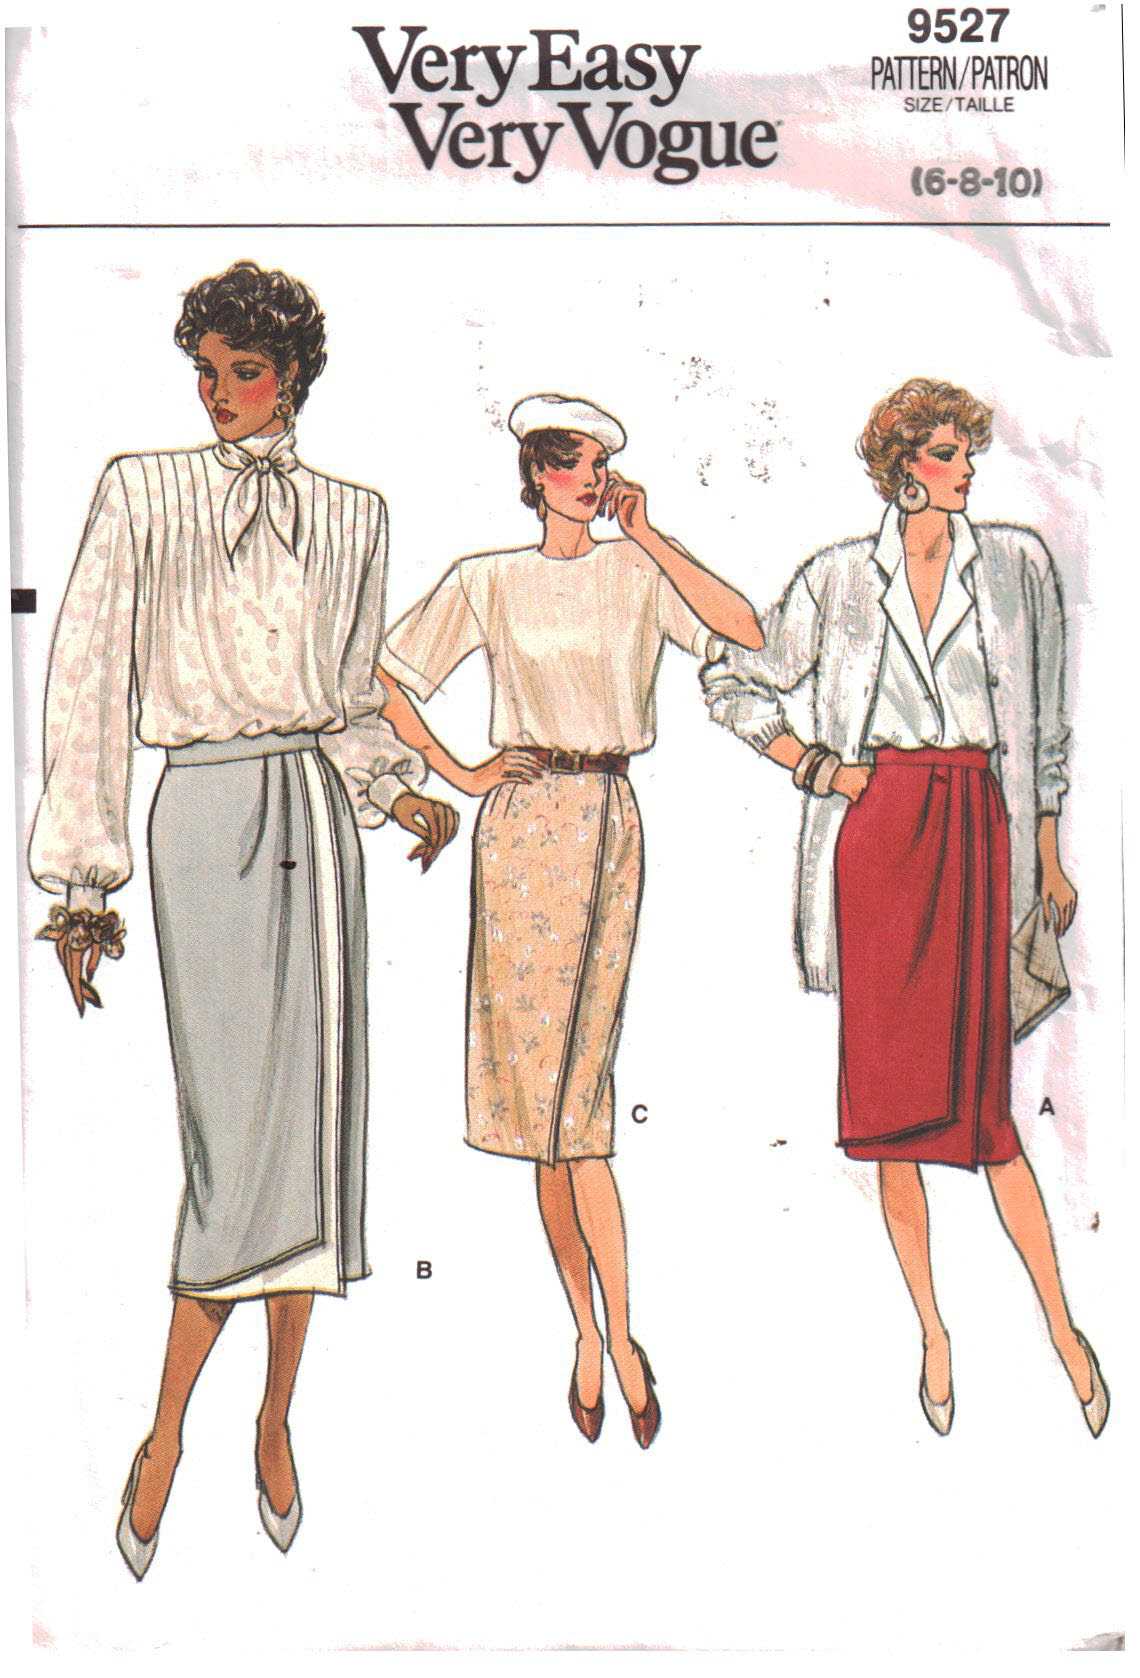 Vogue 9527 Skirt Size: 6-8-10 Uncut Sewing Pattern